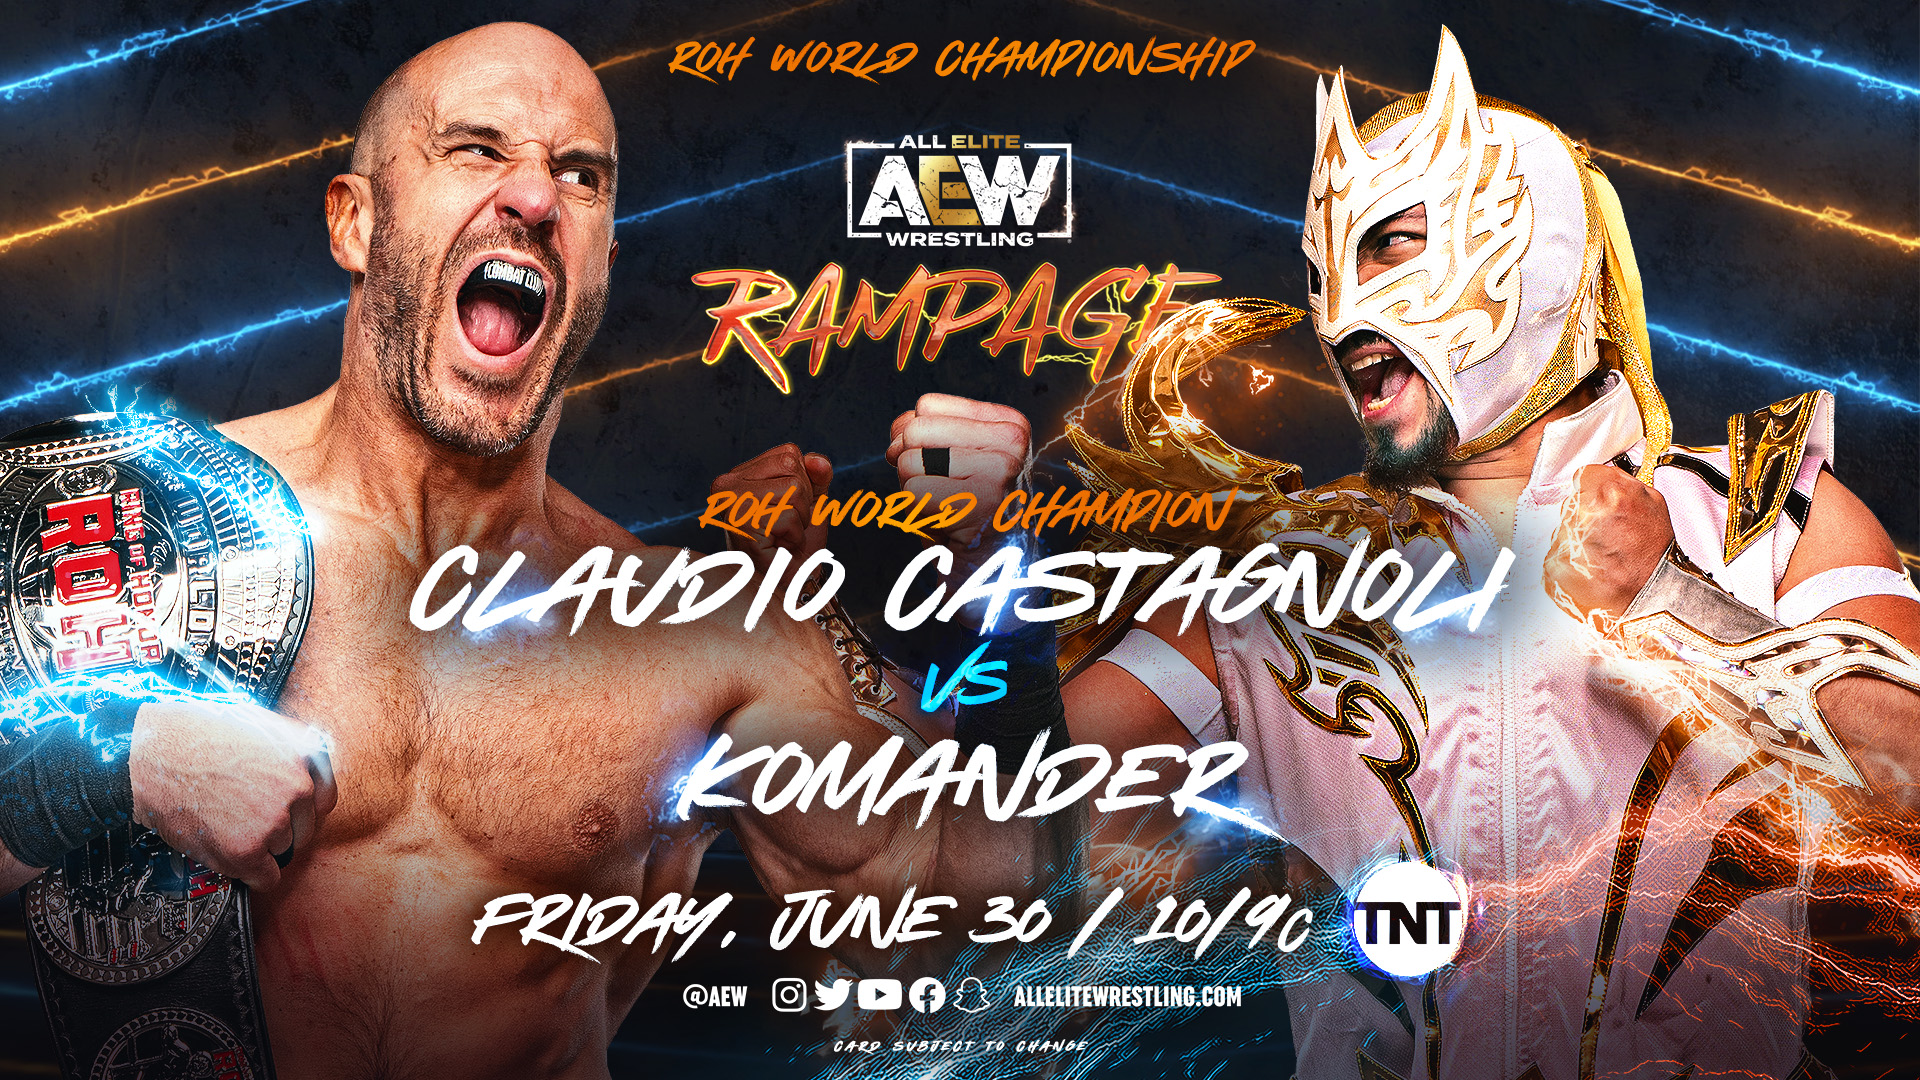 AEW Rampage graphic featuring Claudio Castagnoli vs. Komander for the ROH World Title.